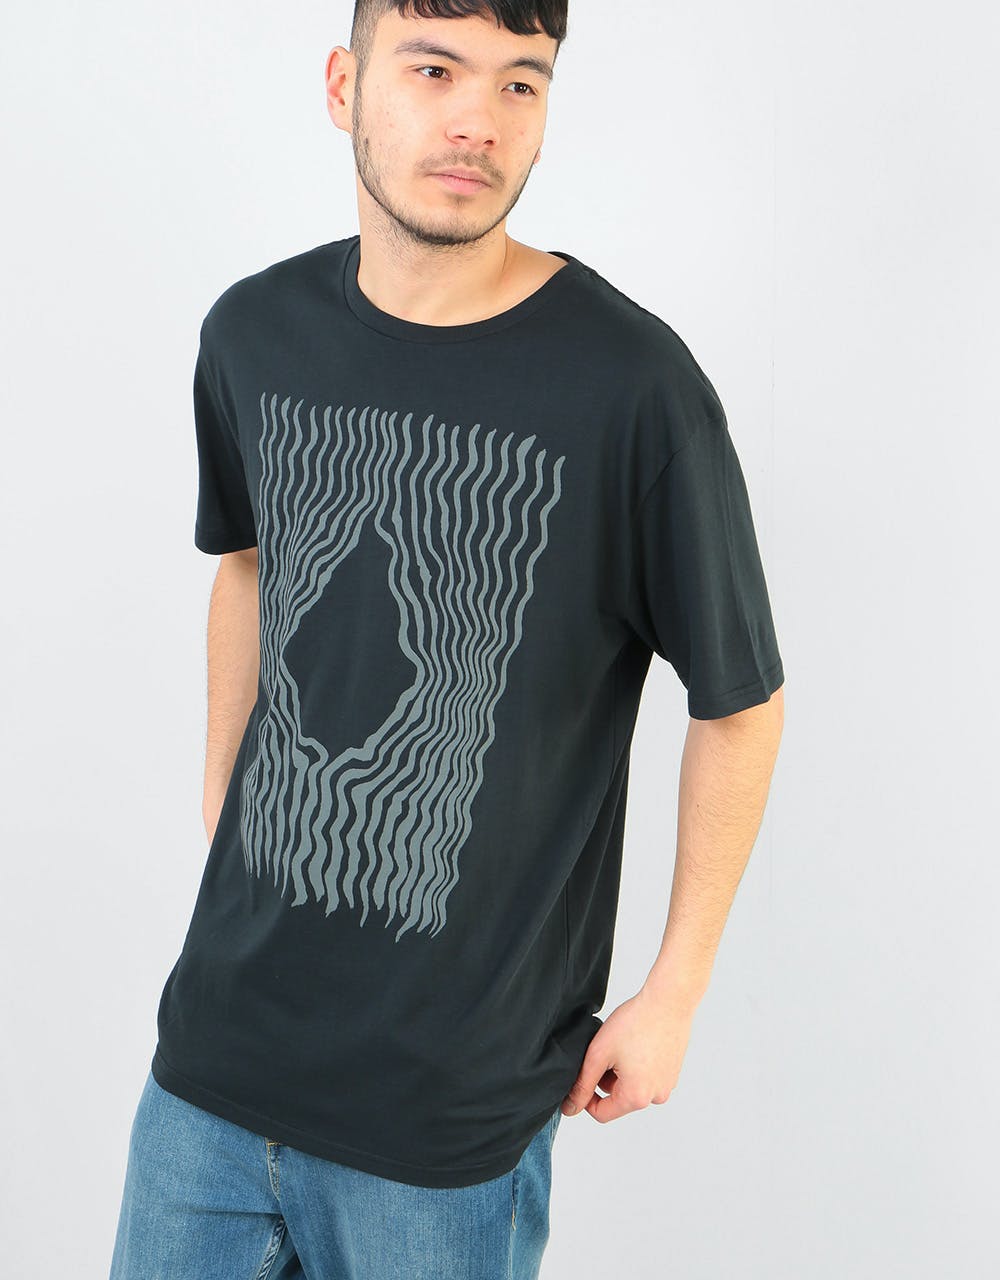 Volcom Wiggly T-Shirt - Black